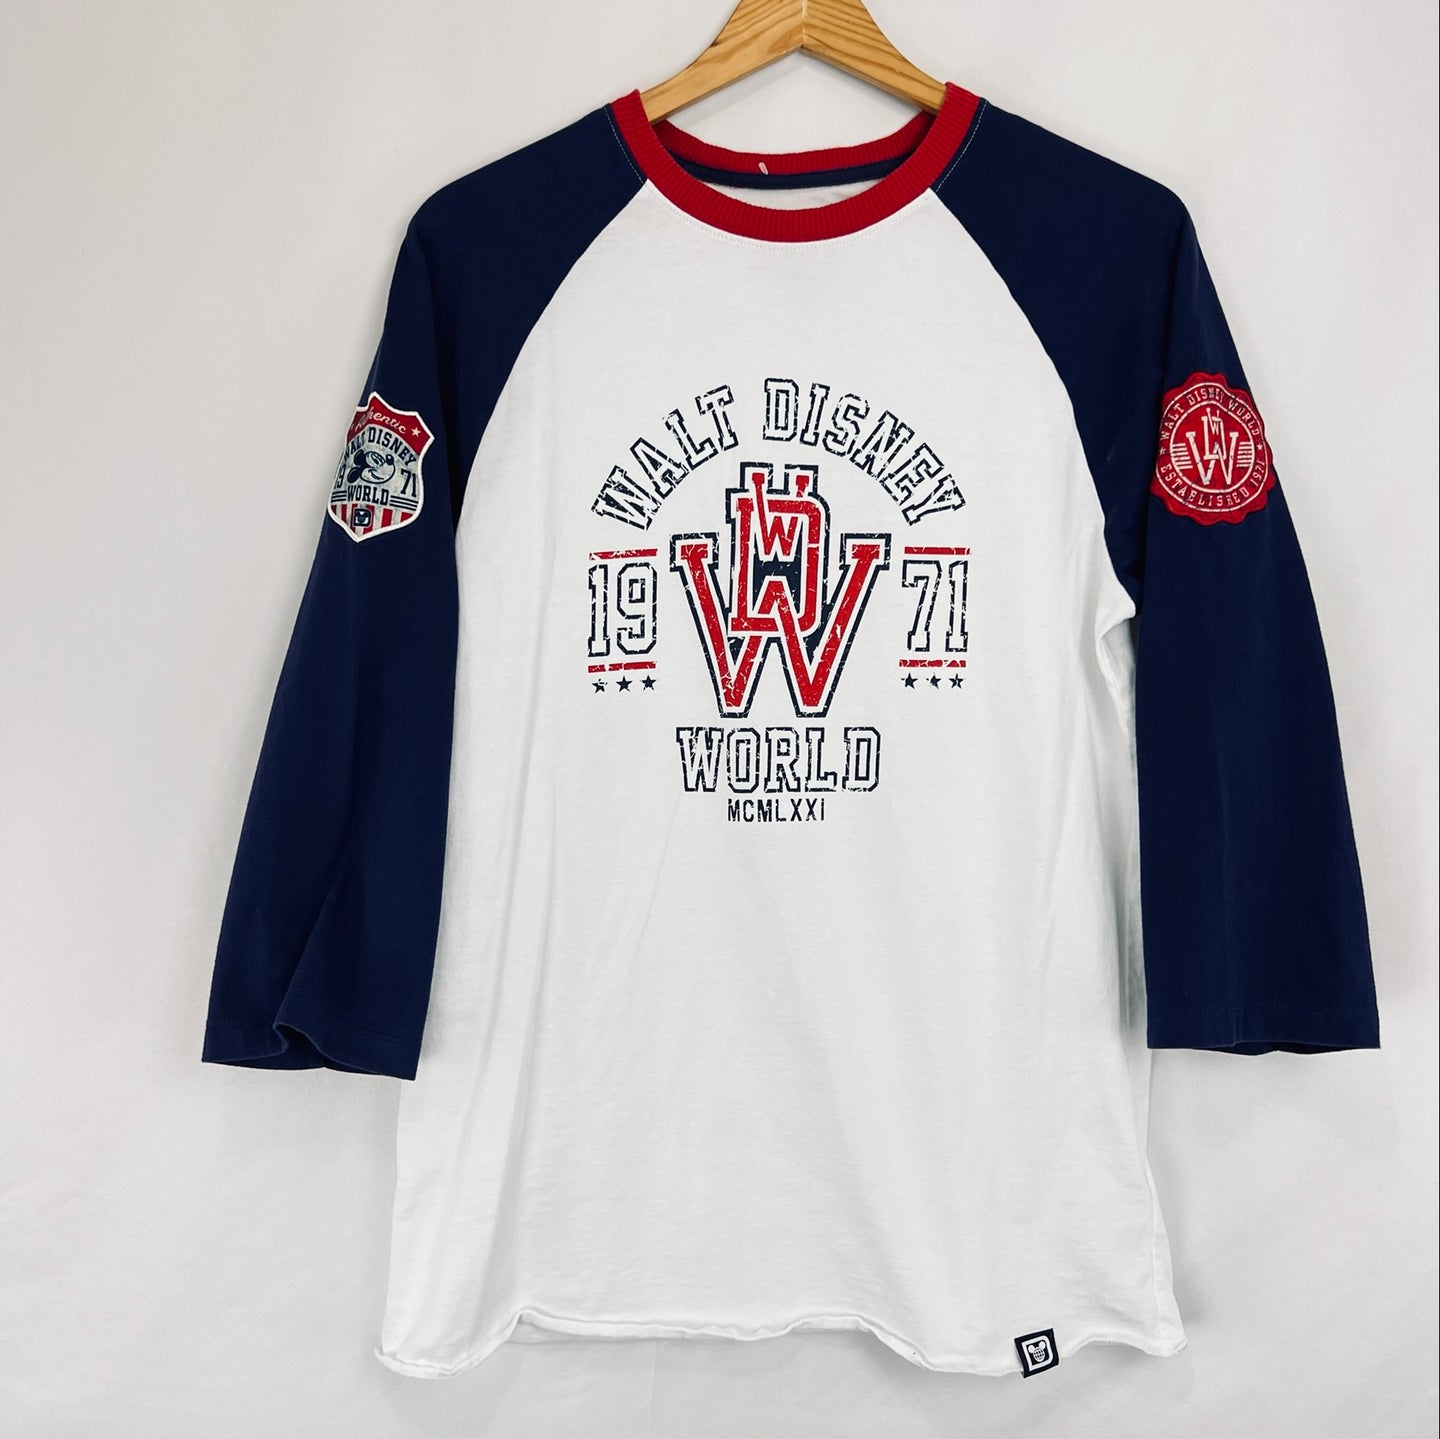 Walt Disney World Baseball Shirt Long Sleeve Size Small Chest 37.5